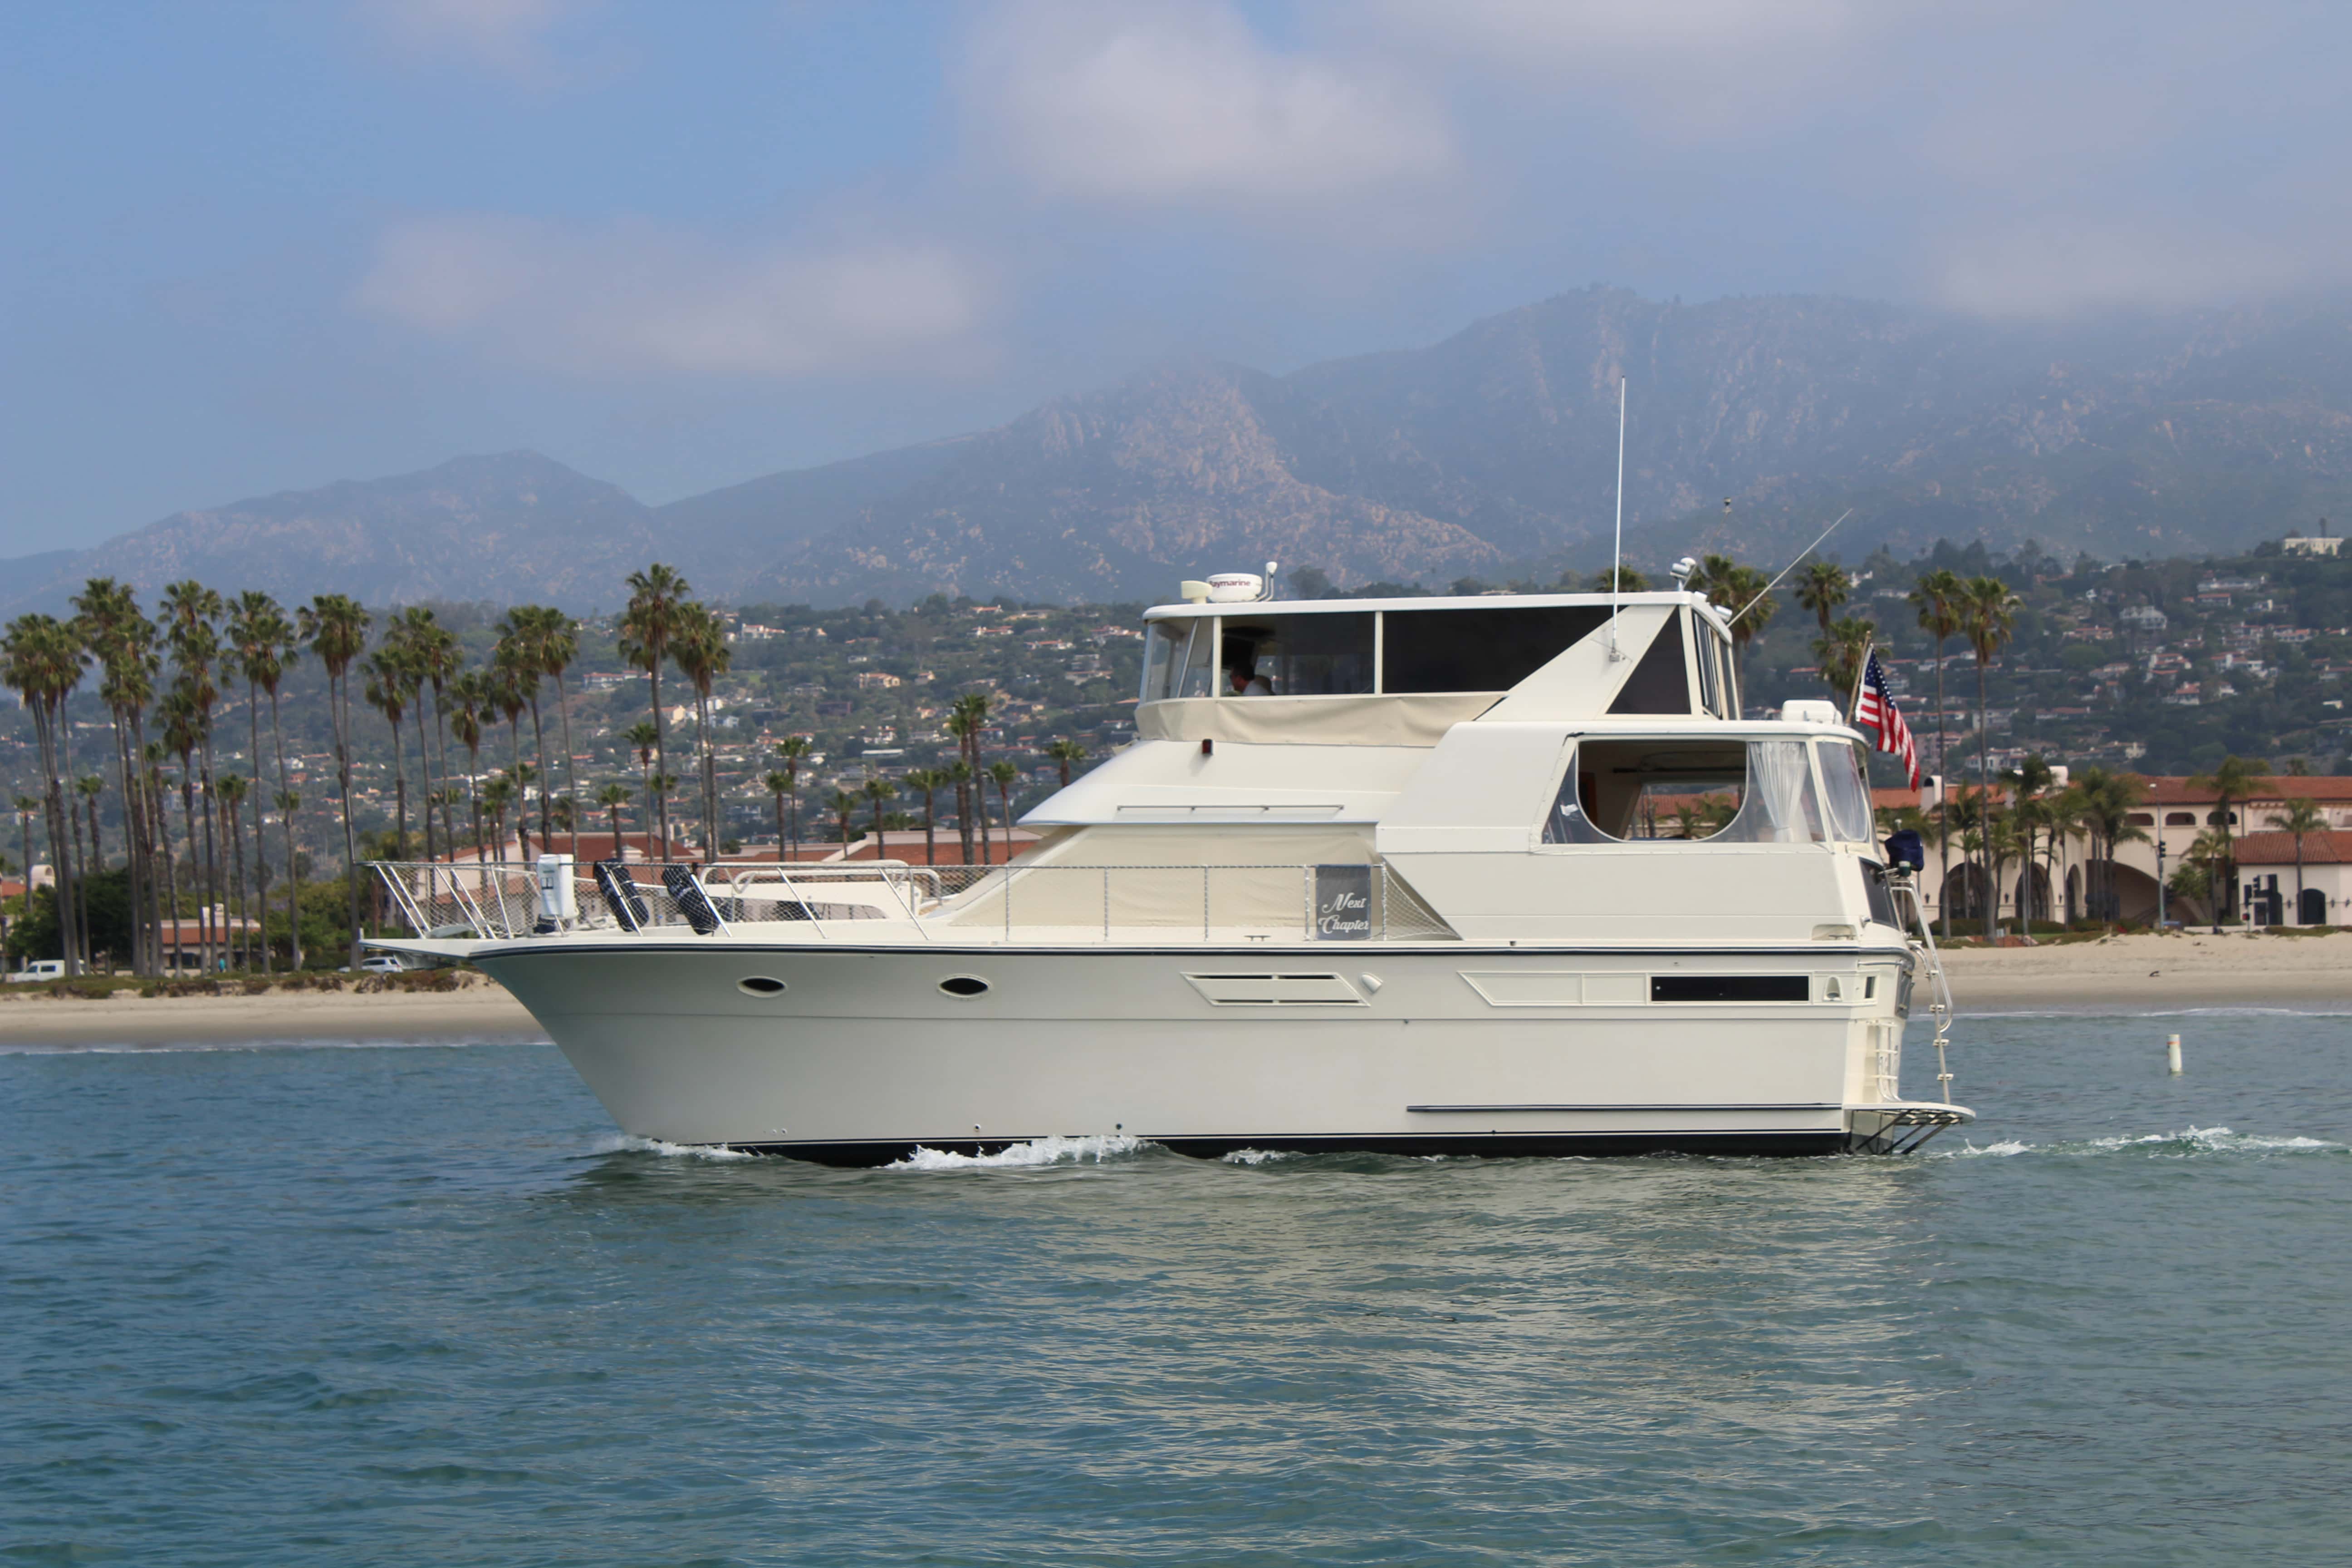 Chandlery Yacht Sales - Santa Barbara, CA, US, boat sales